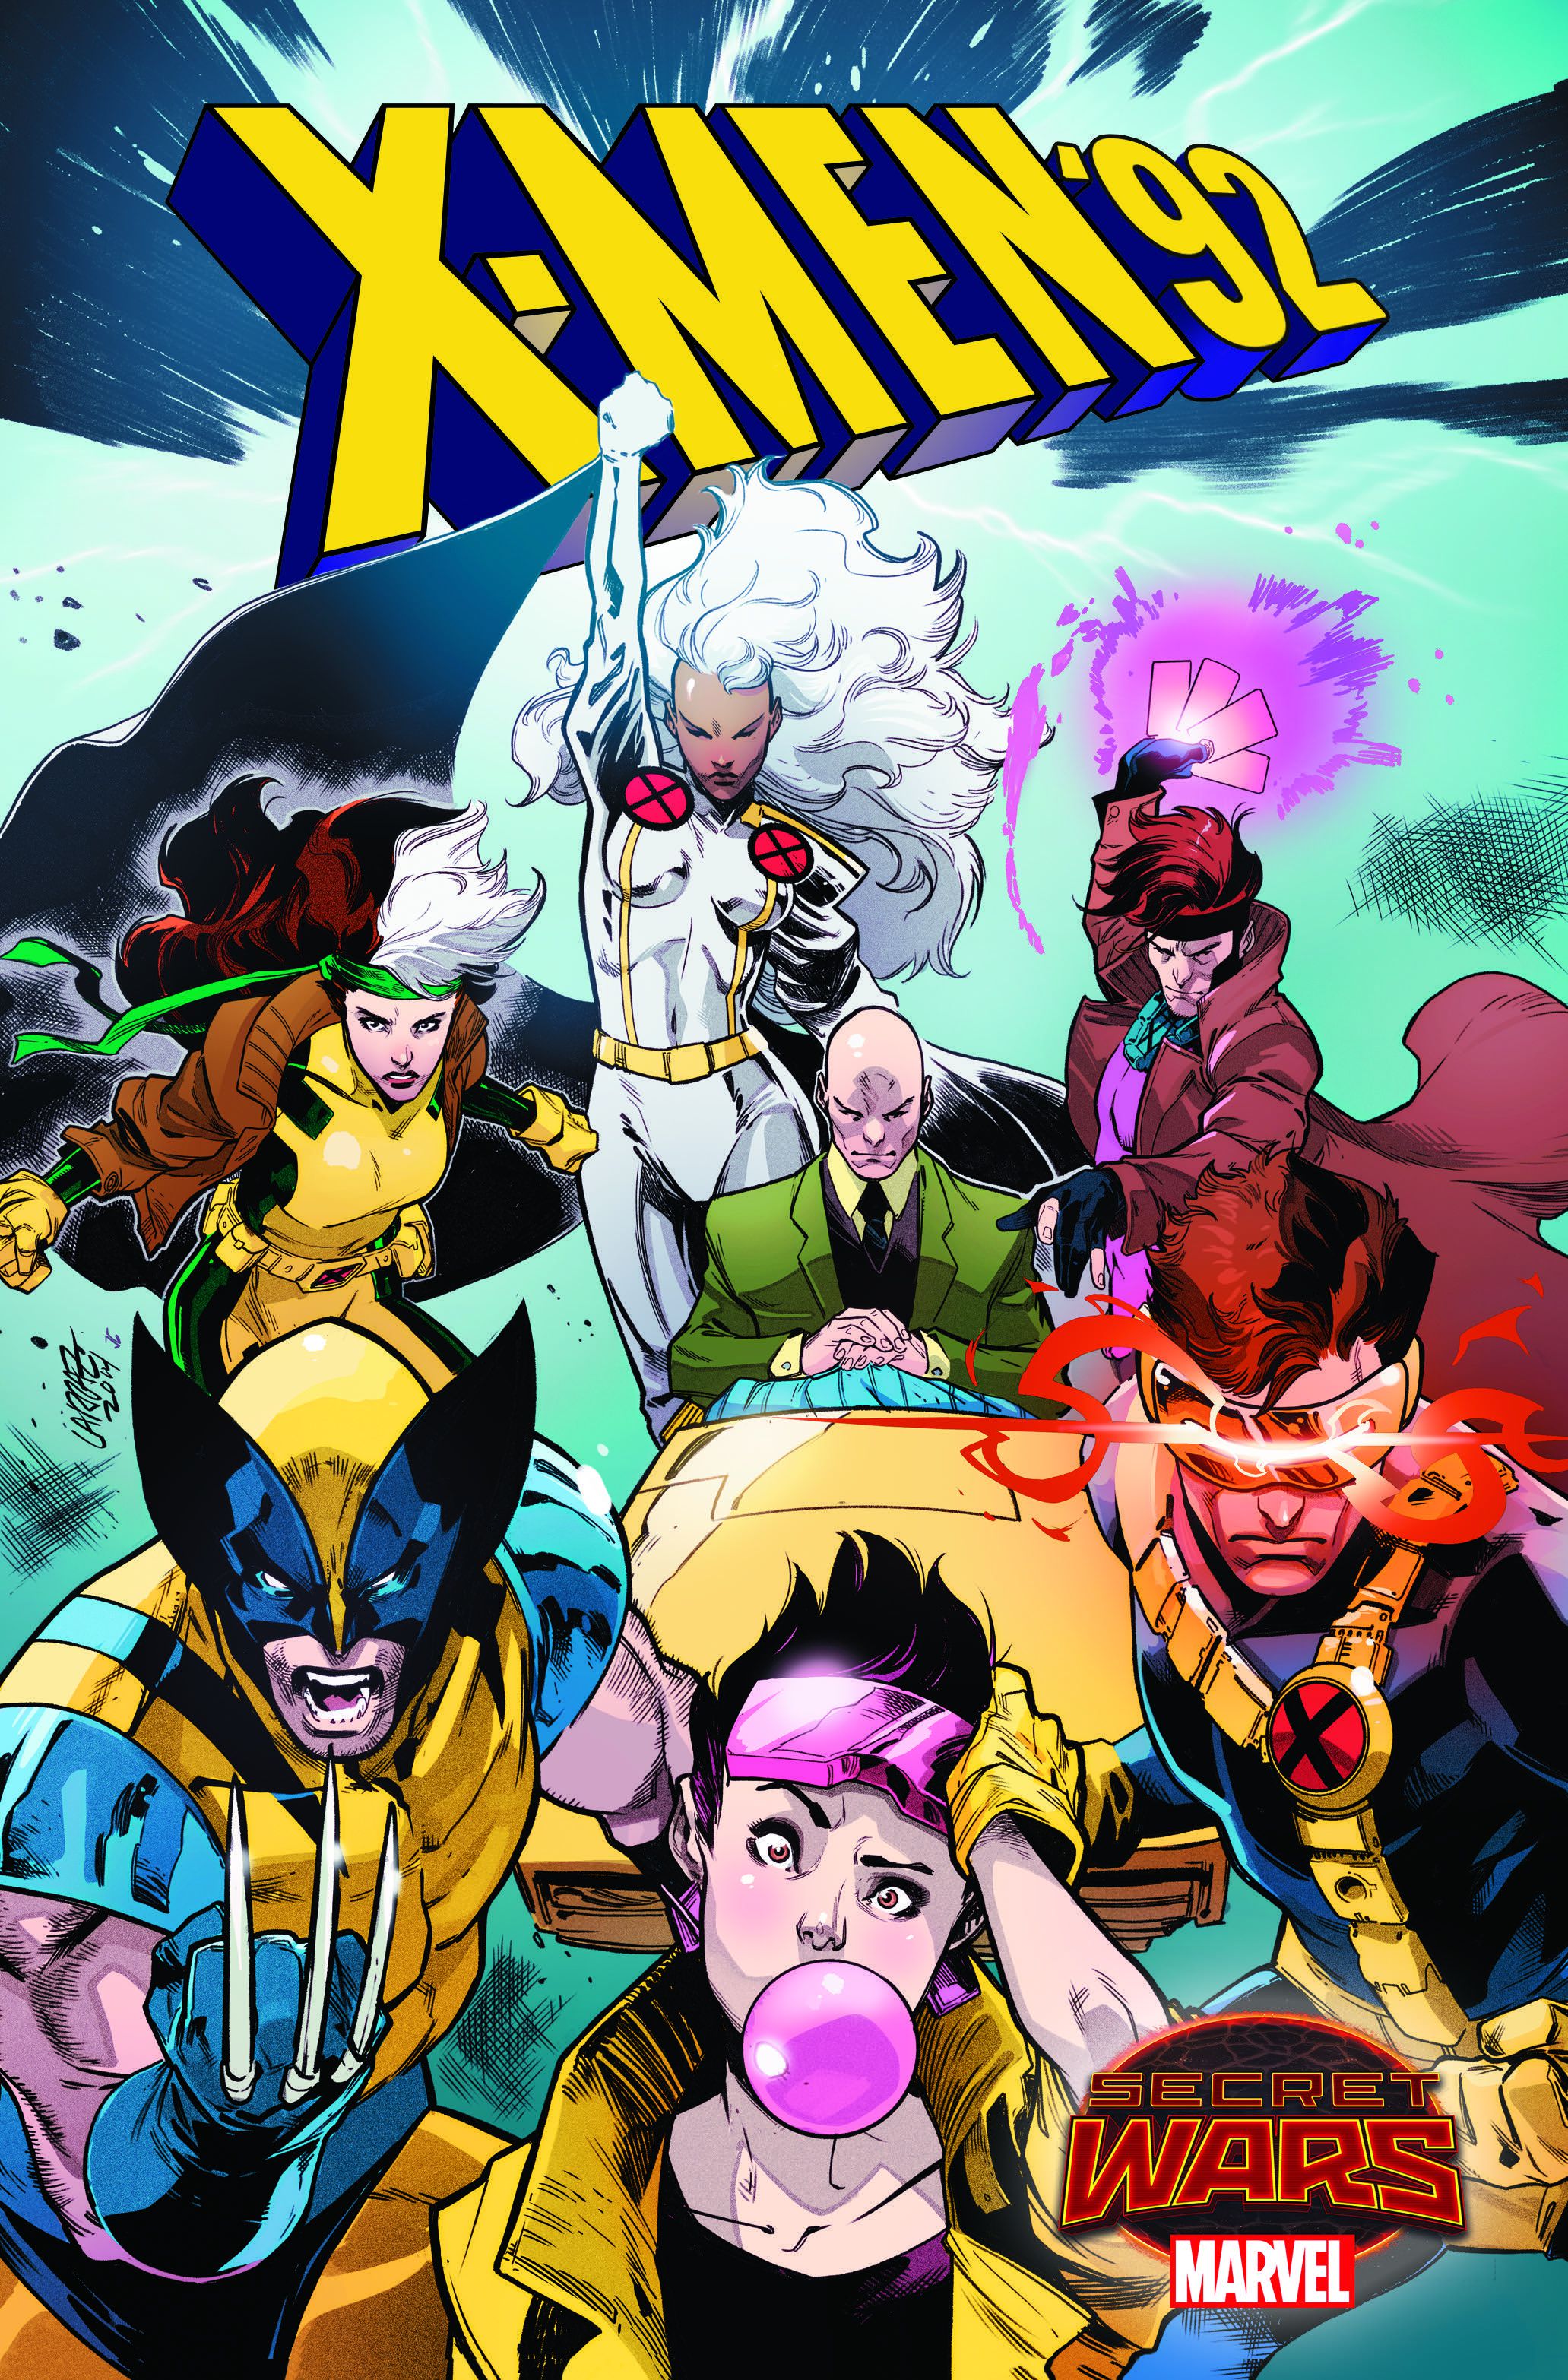 Marvel's XMen '92 1 will bring the '90s cartoon XMen